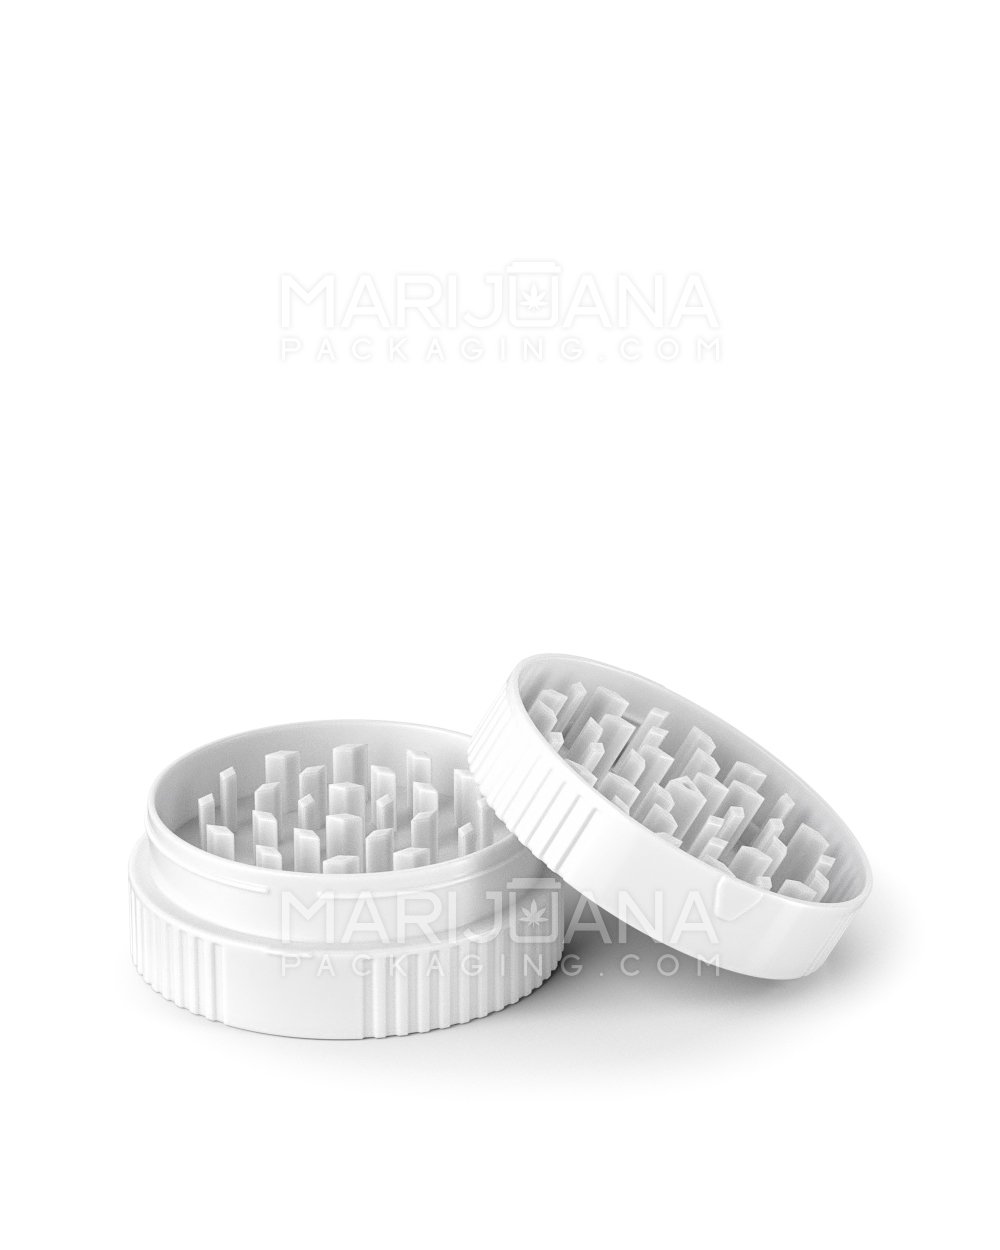 Child Resistant | Plastic Grinder Caps for Vials | 40/60 Dram - White - 50 Count - 2